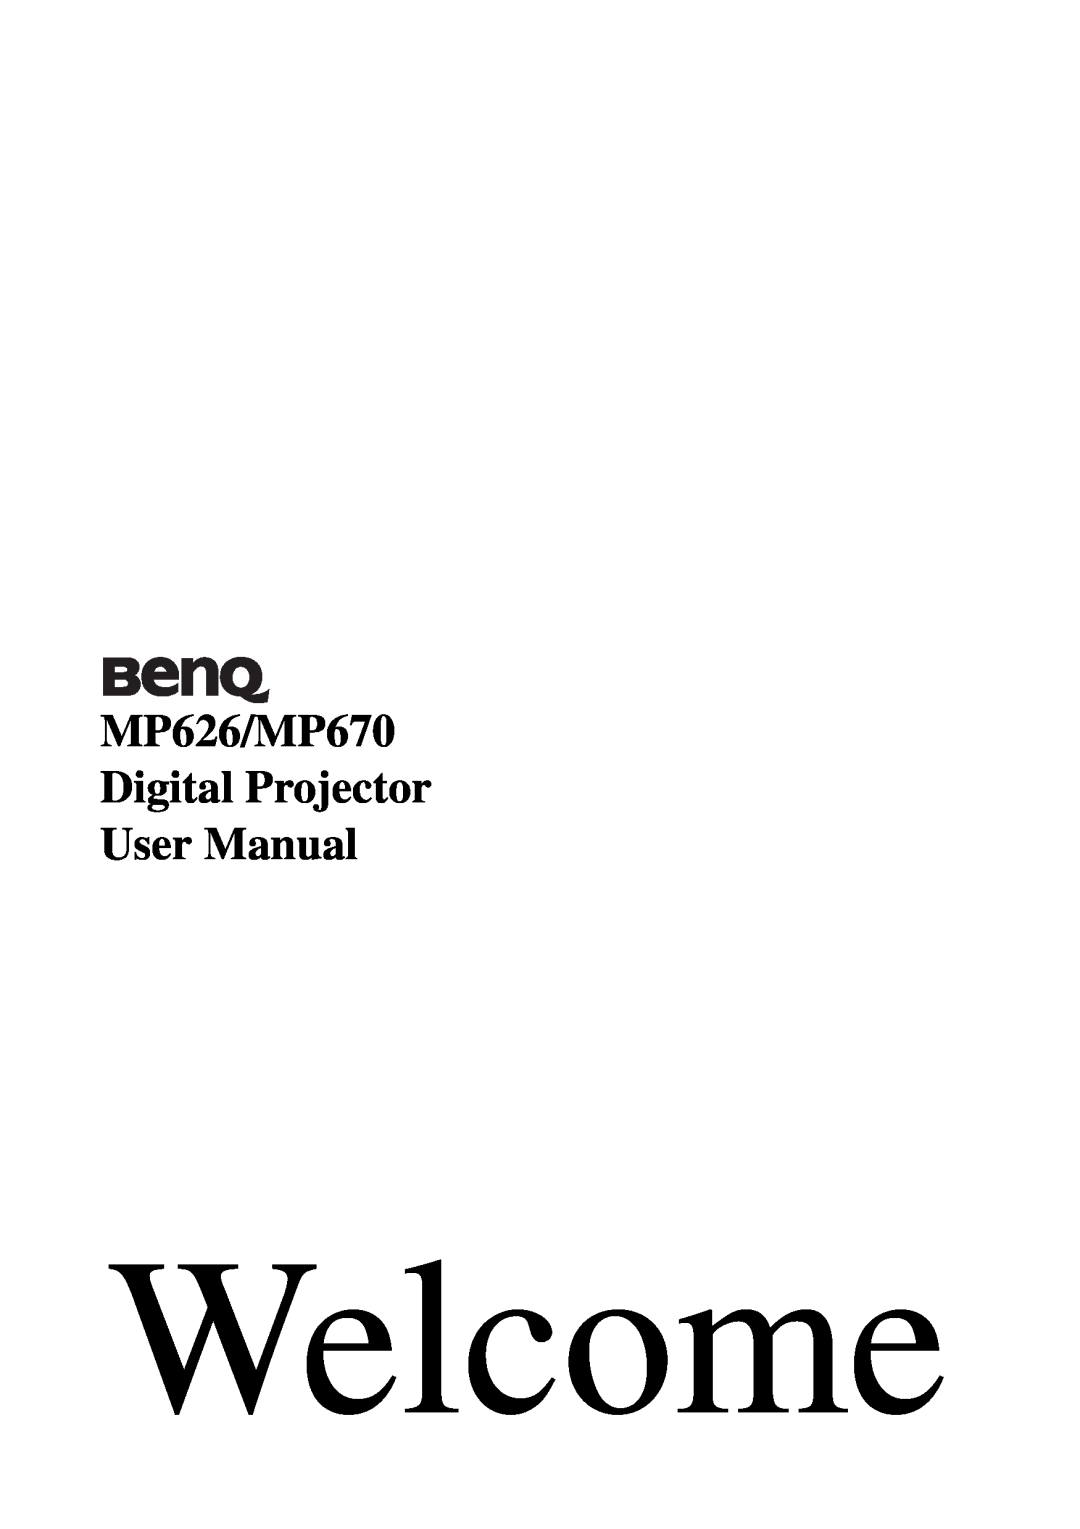 BenQ user manual MP626/MP670 Digital Projector User Manual, Welcome 